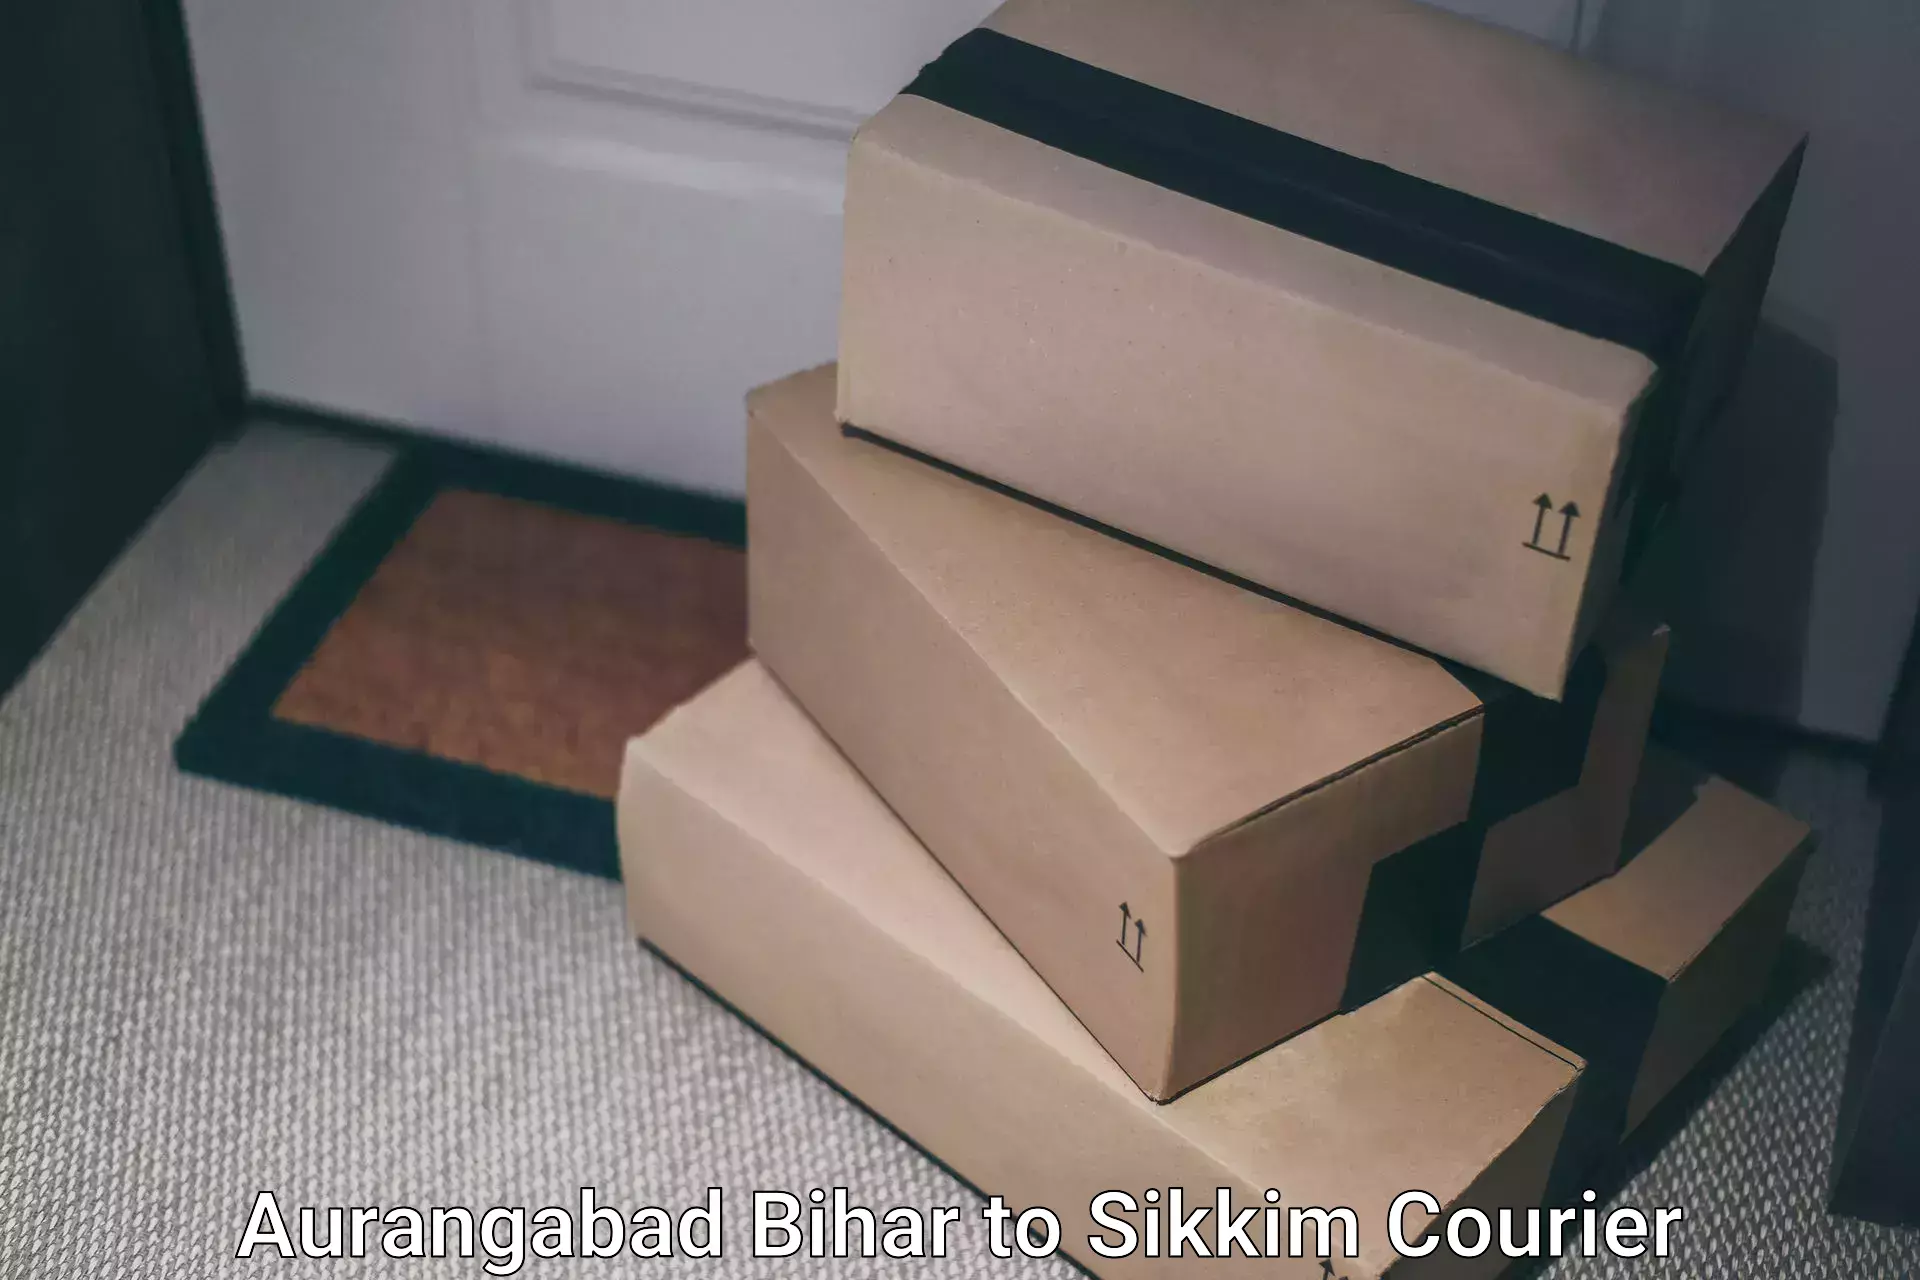 International shipping Aurangabad Bihar to North Sikkim